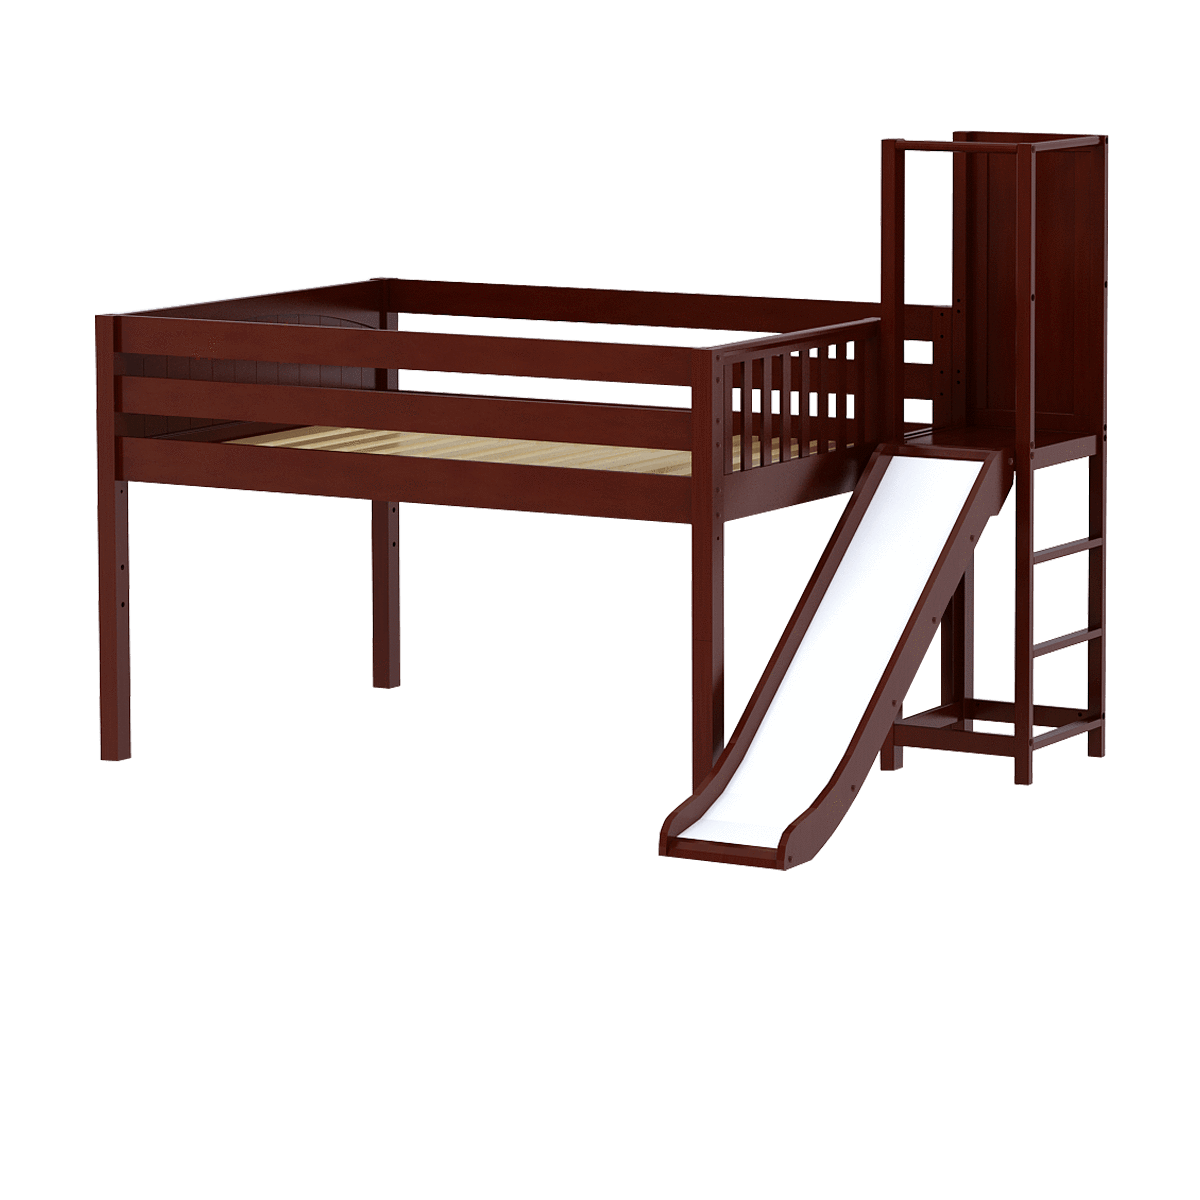 Maxtrix Full Low Loft Bed with Slide Platform